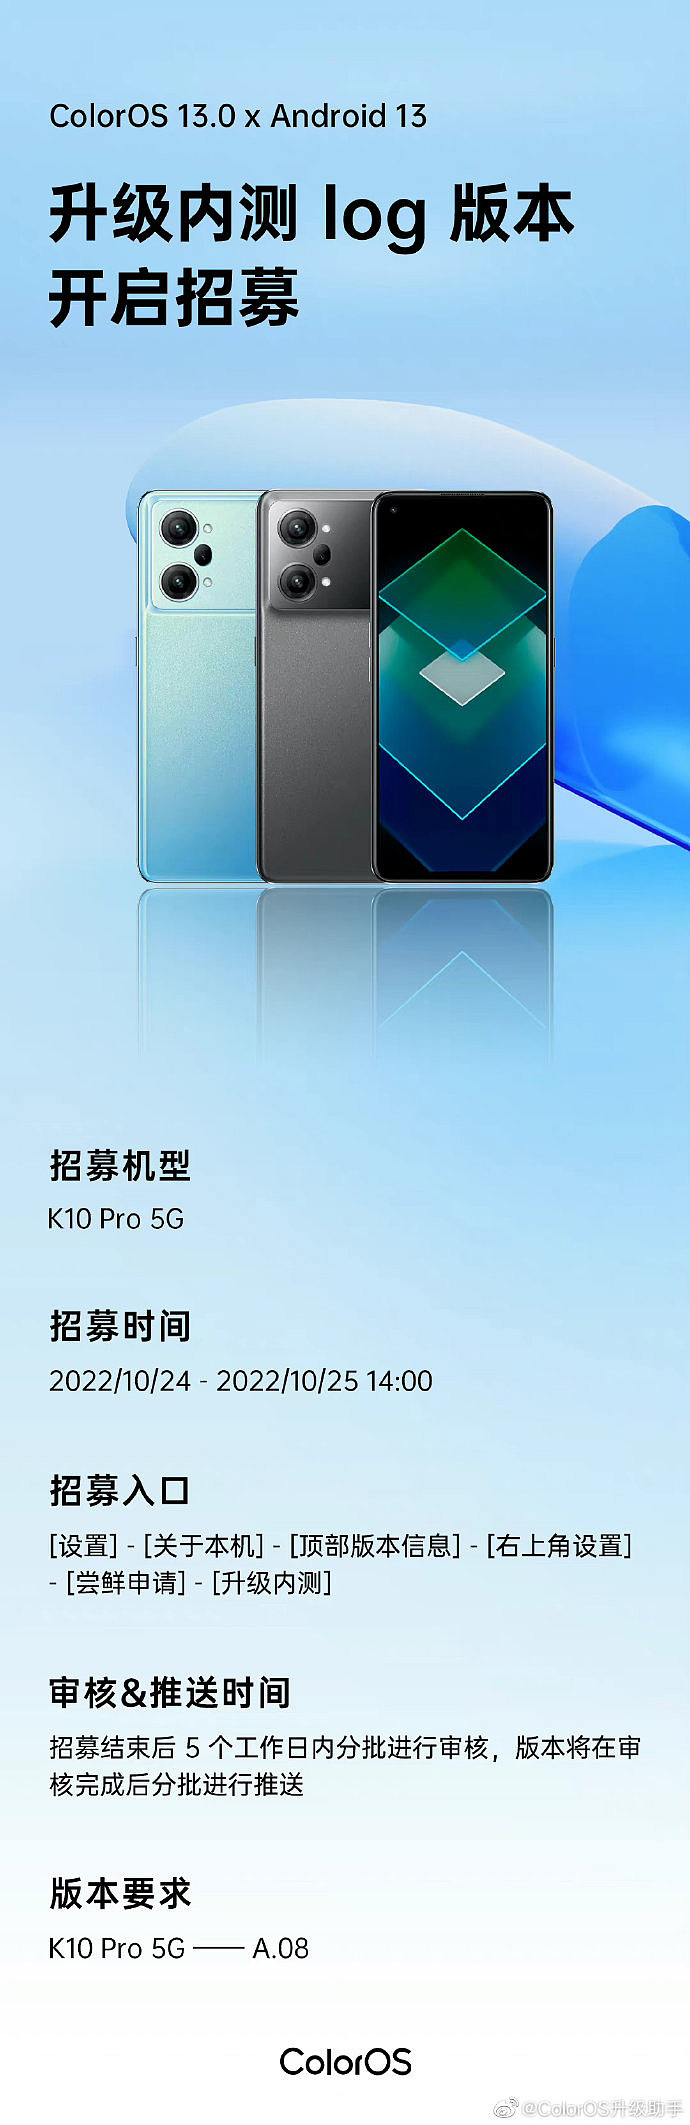 OPPO K10 Pro 5G 开启安卓 13 / ColorOS 13 内测：搭载骁龙 888 芯片 - 2